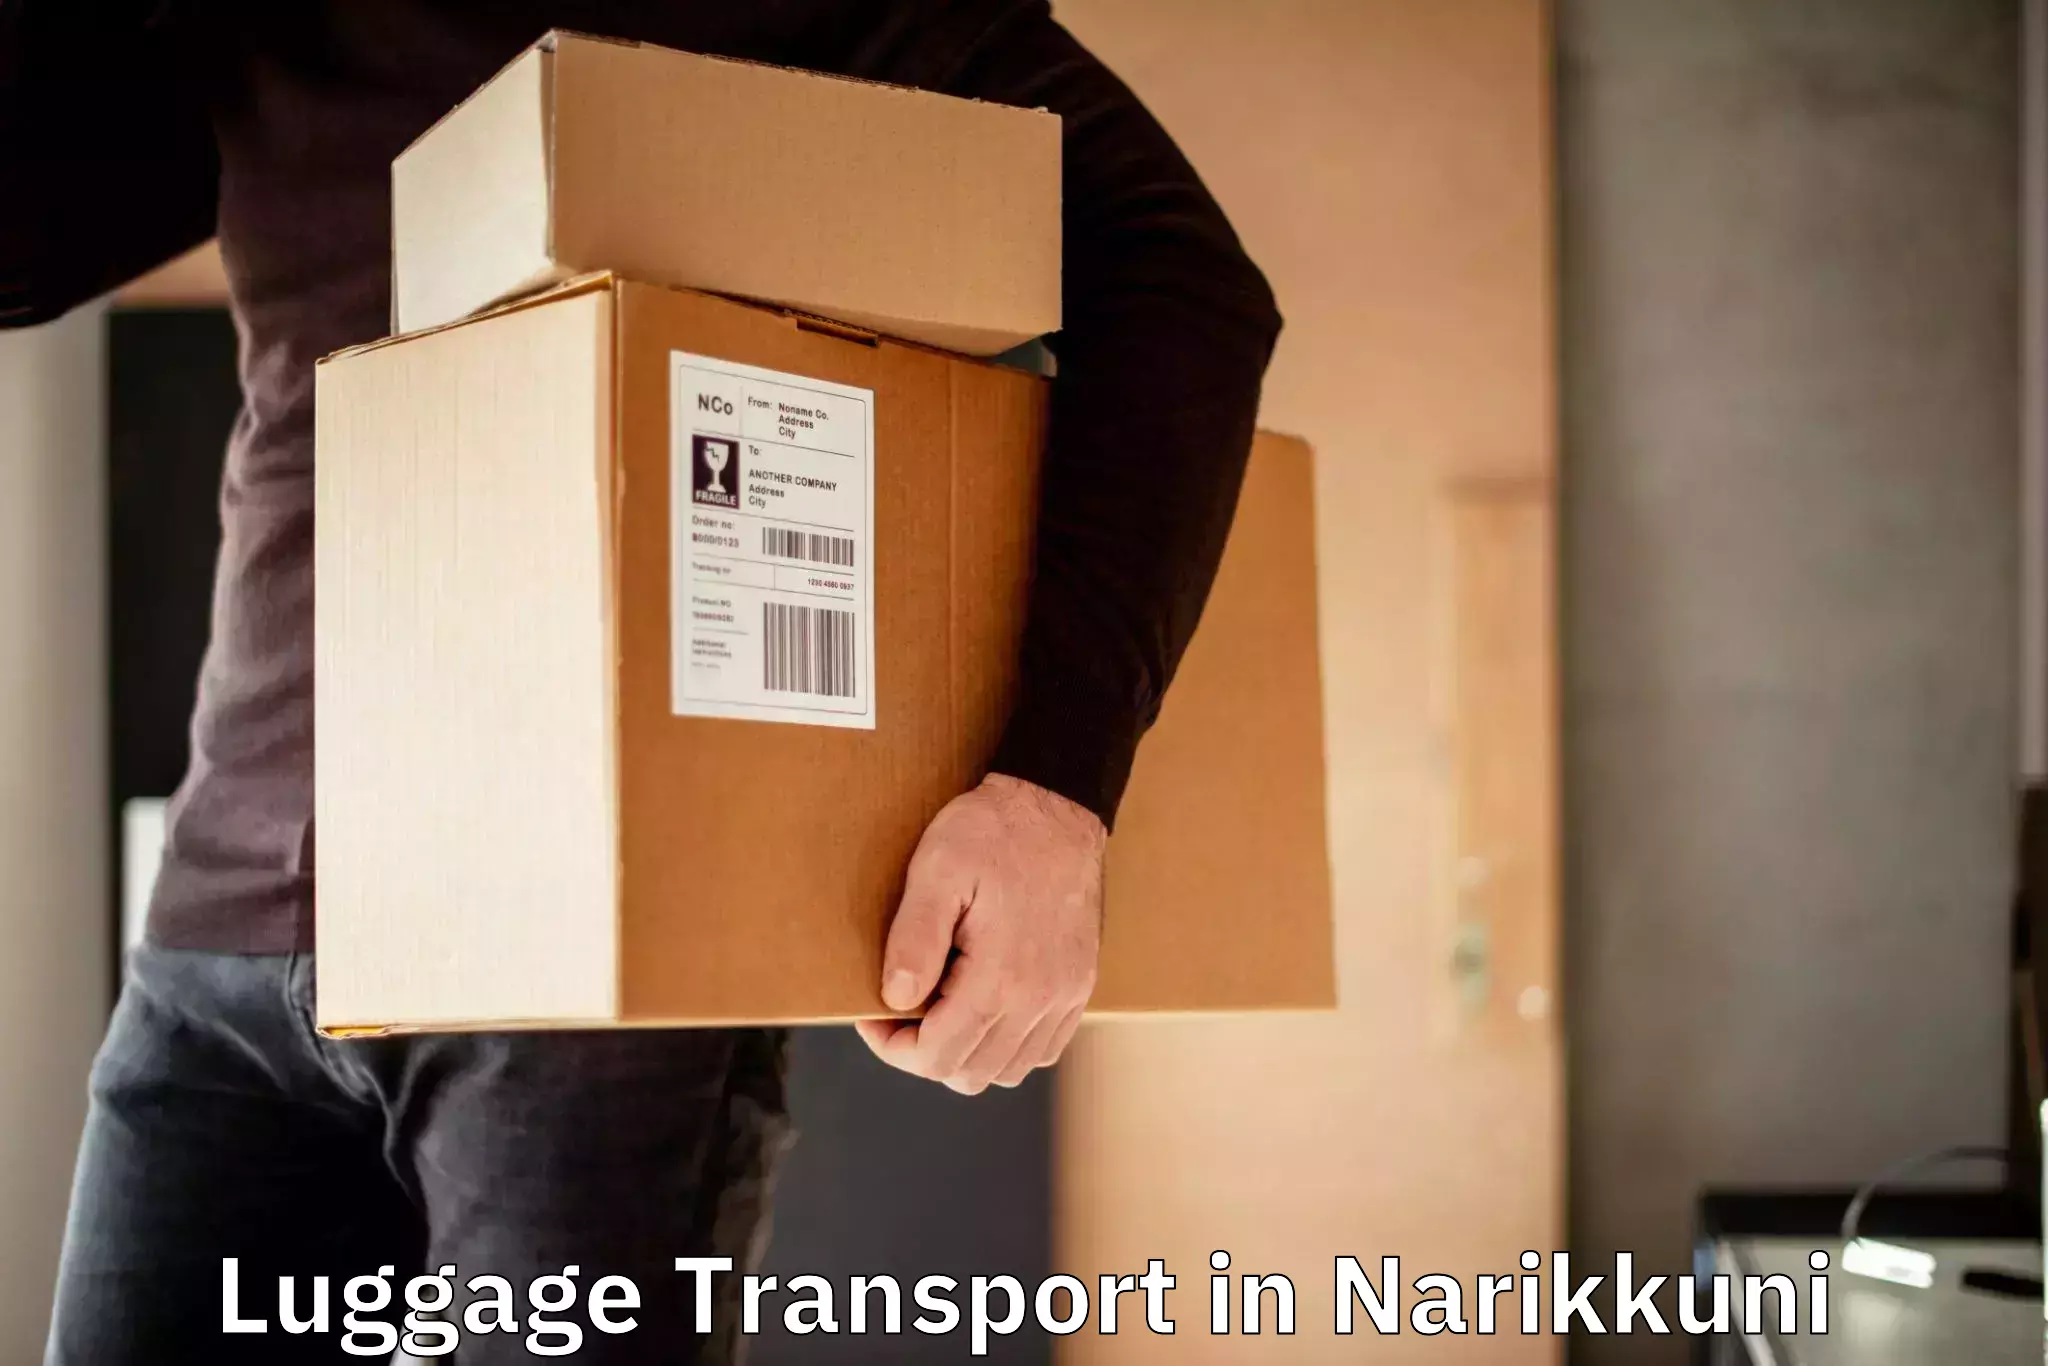 Holiday season luggage delivery in Narikkuni